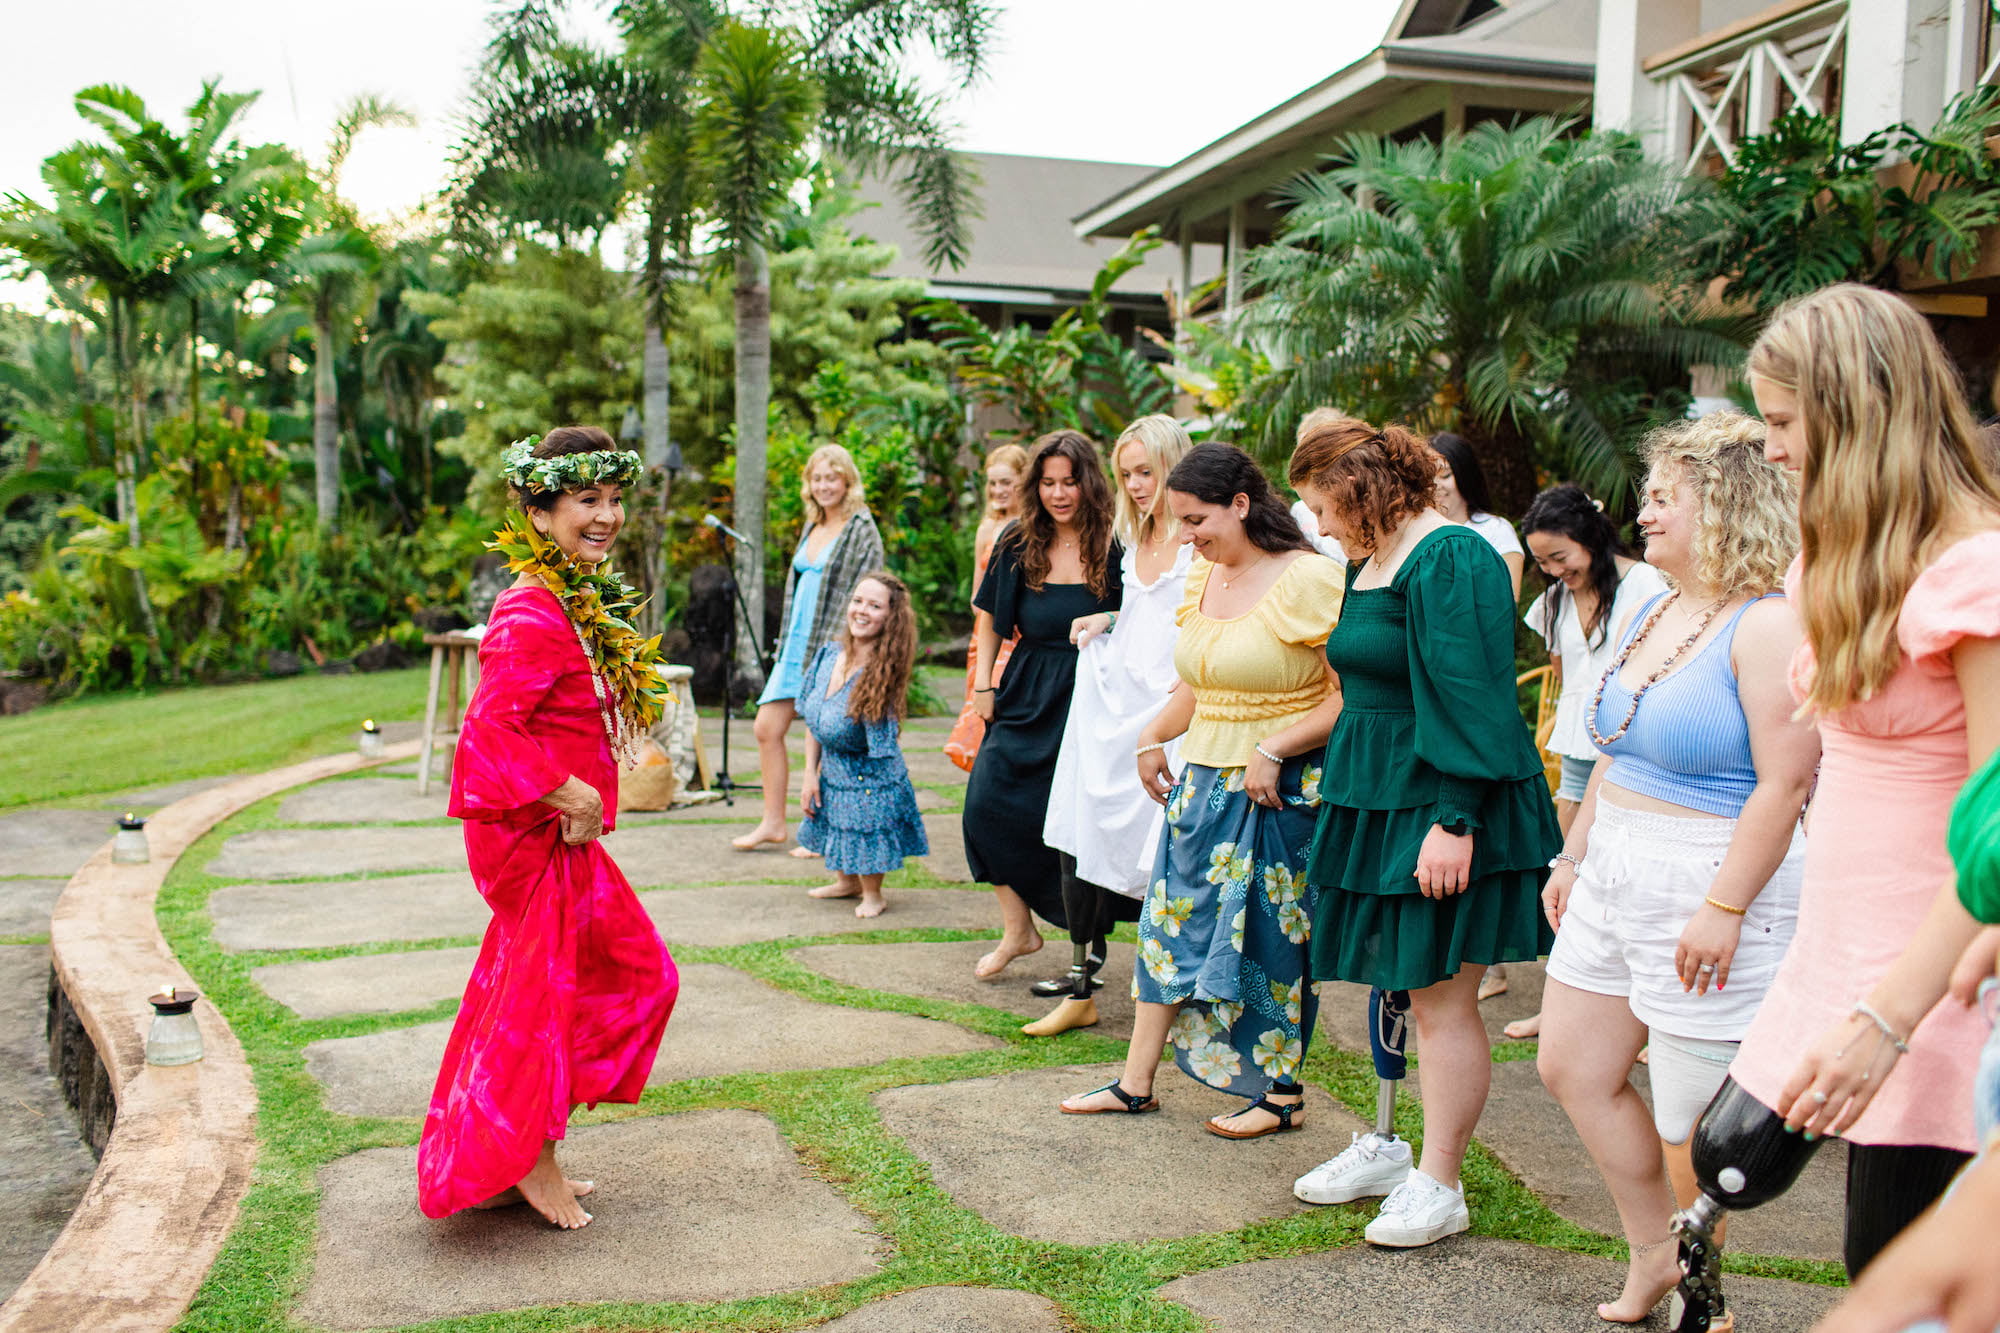 Kumu Lei teaching our retreat attendees how to dance hula